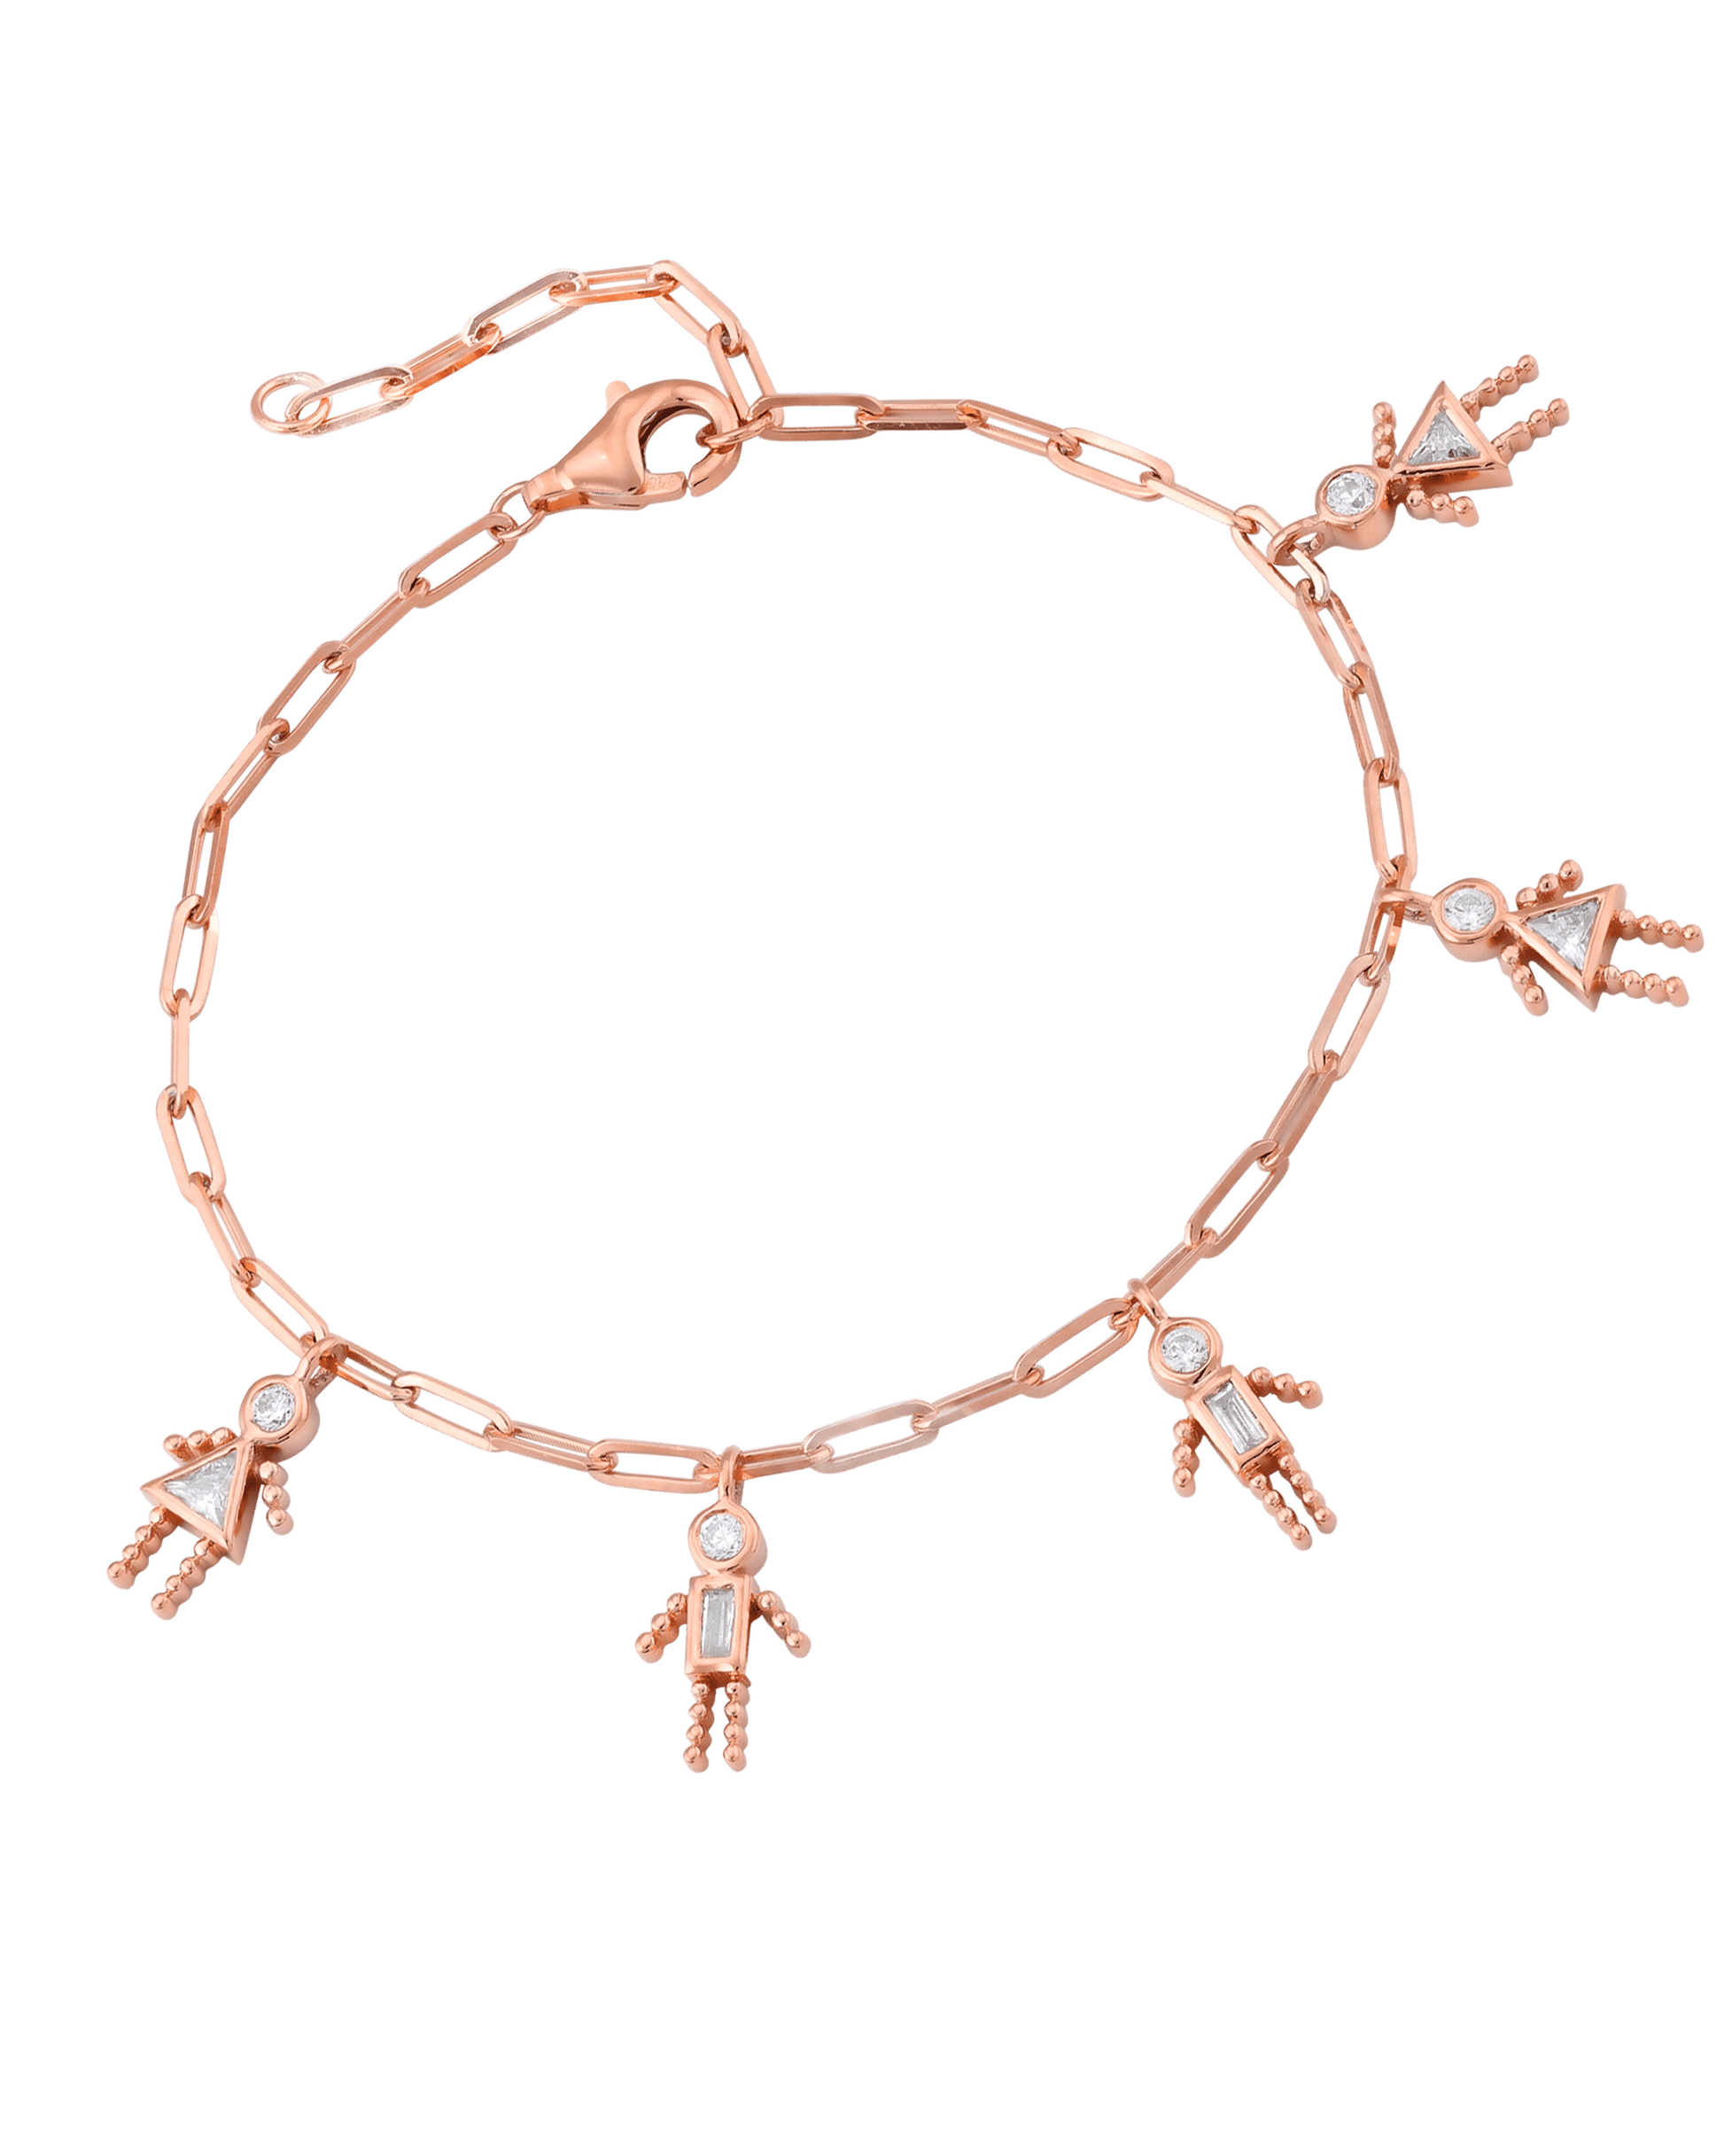 Mini Me Links Bracelet - 925 Sterling Silver Bracelets magal-dev 